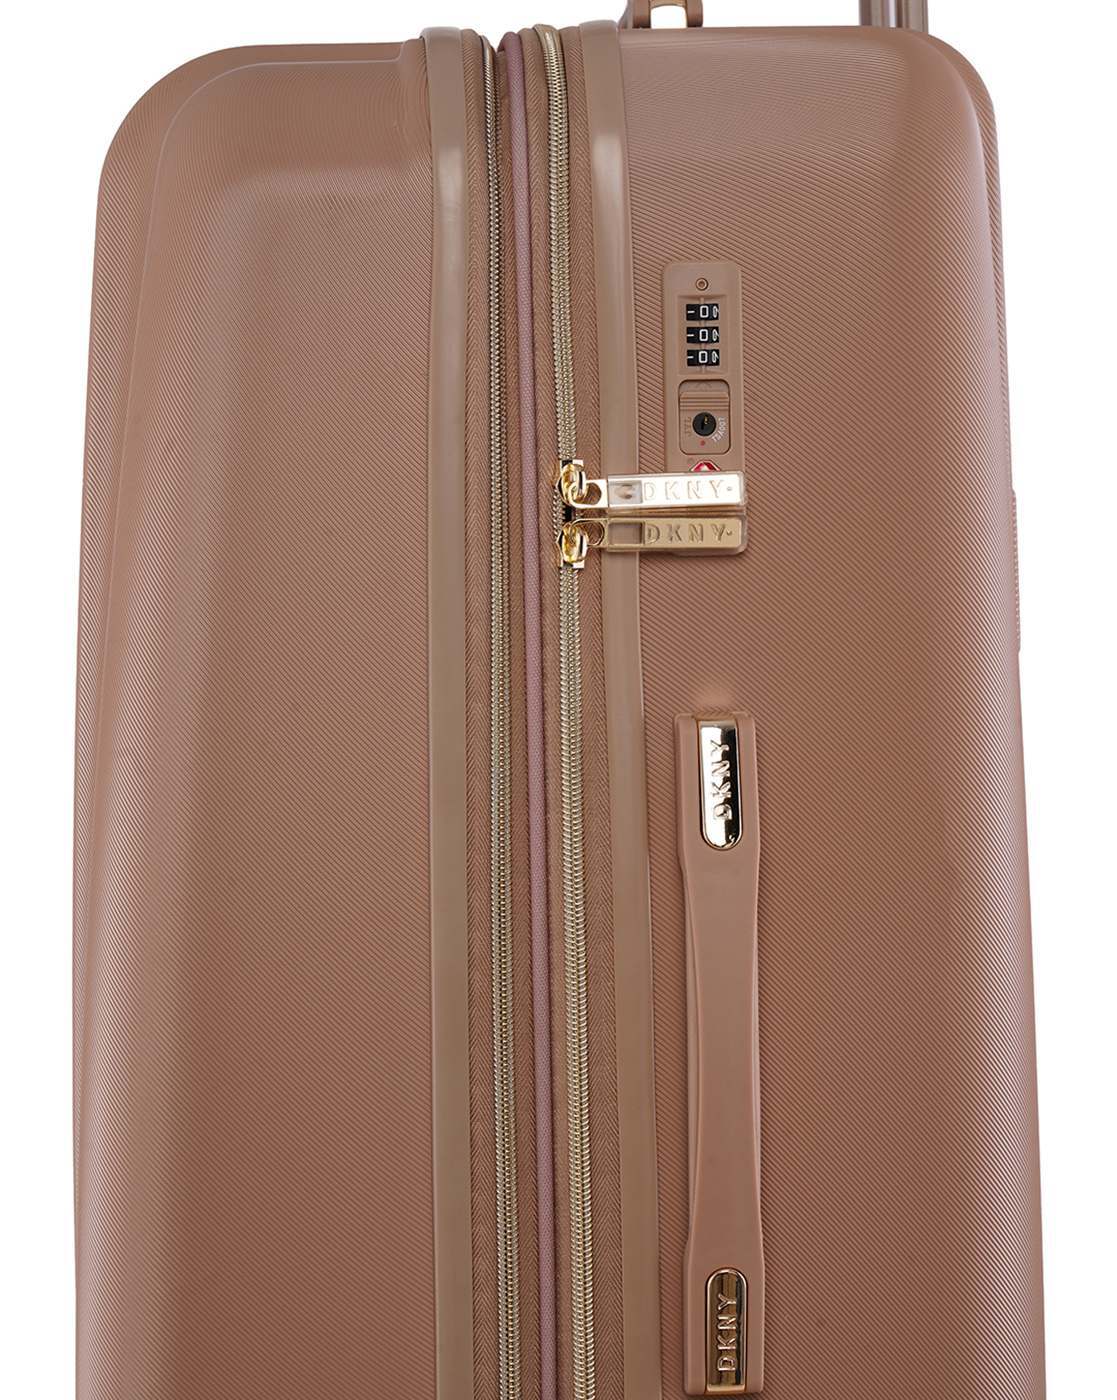 DKNY Bias 28 | Purses and handbags, Cute luggage, Trolley bags